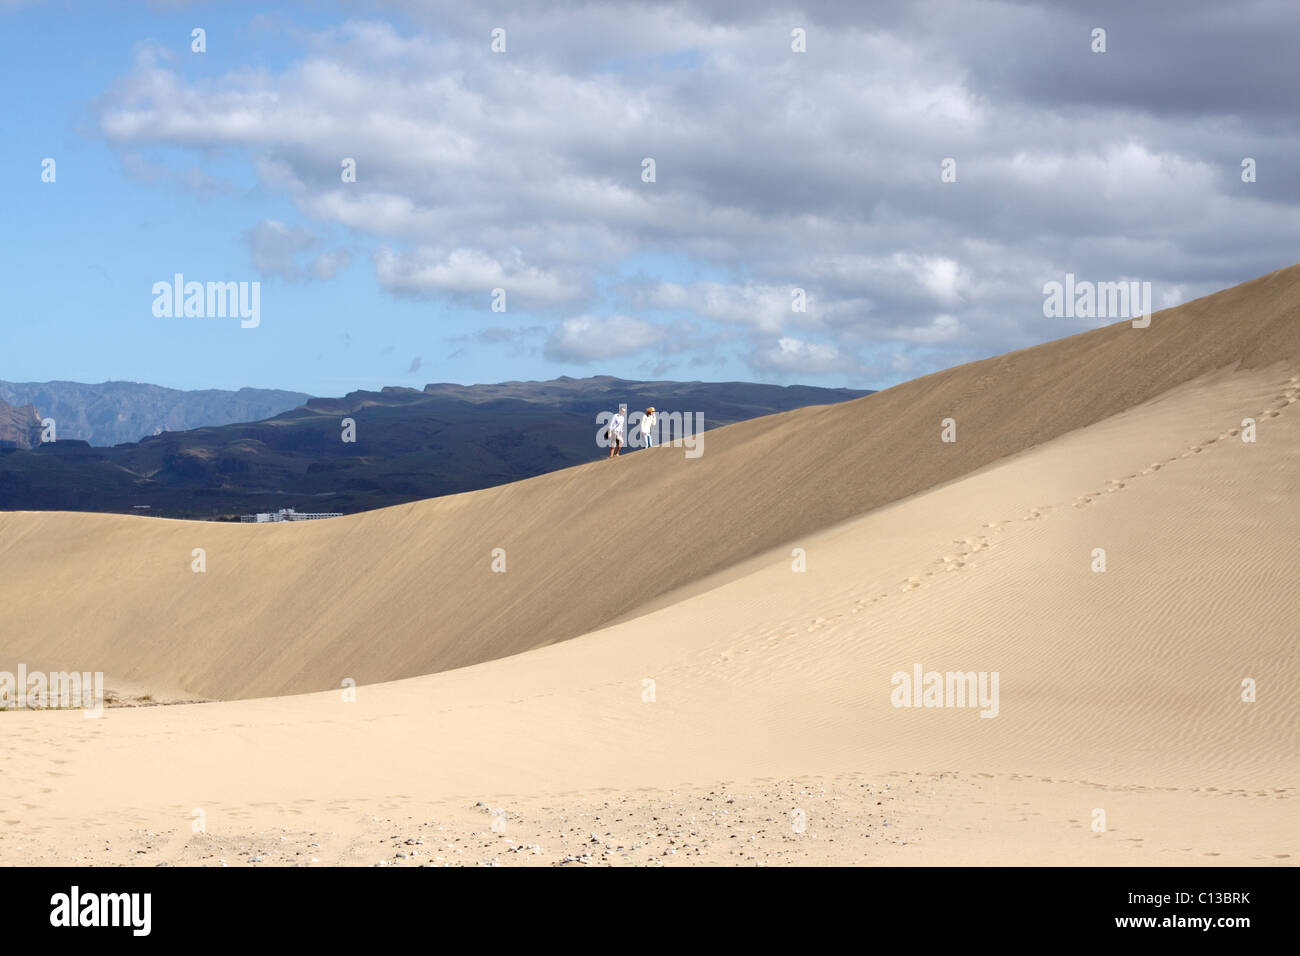 DUNAS DE MASPALOMAS. Les dunes de sable de Maspalomas. GRAN CANARIA. Île des Canaries. Banque D'Images